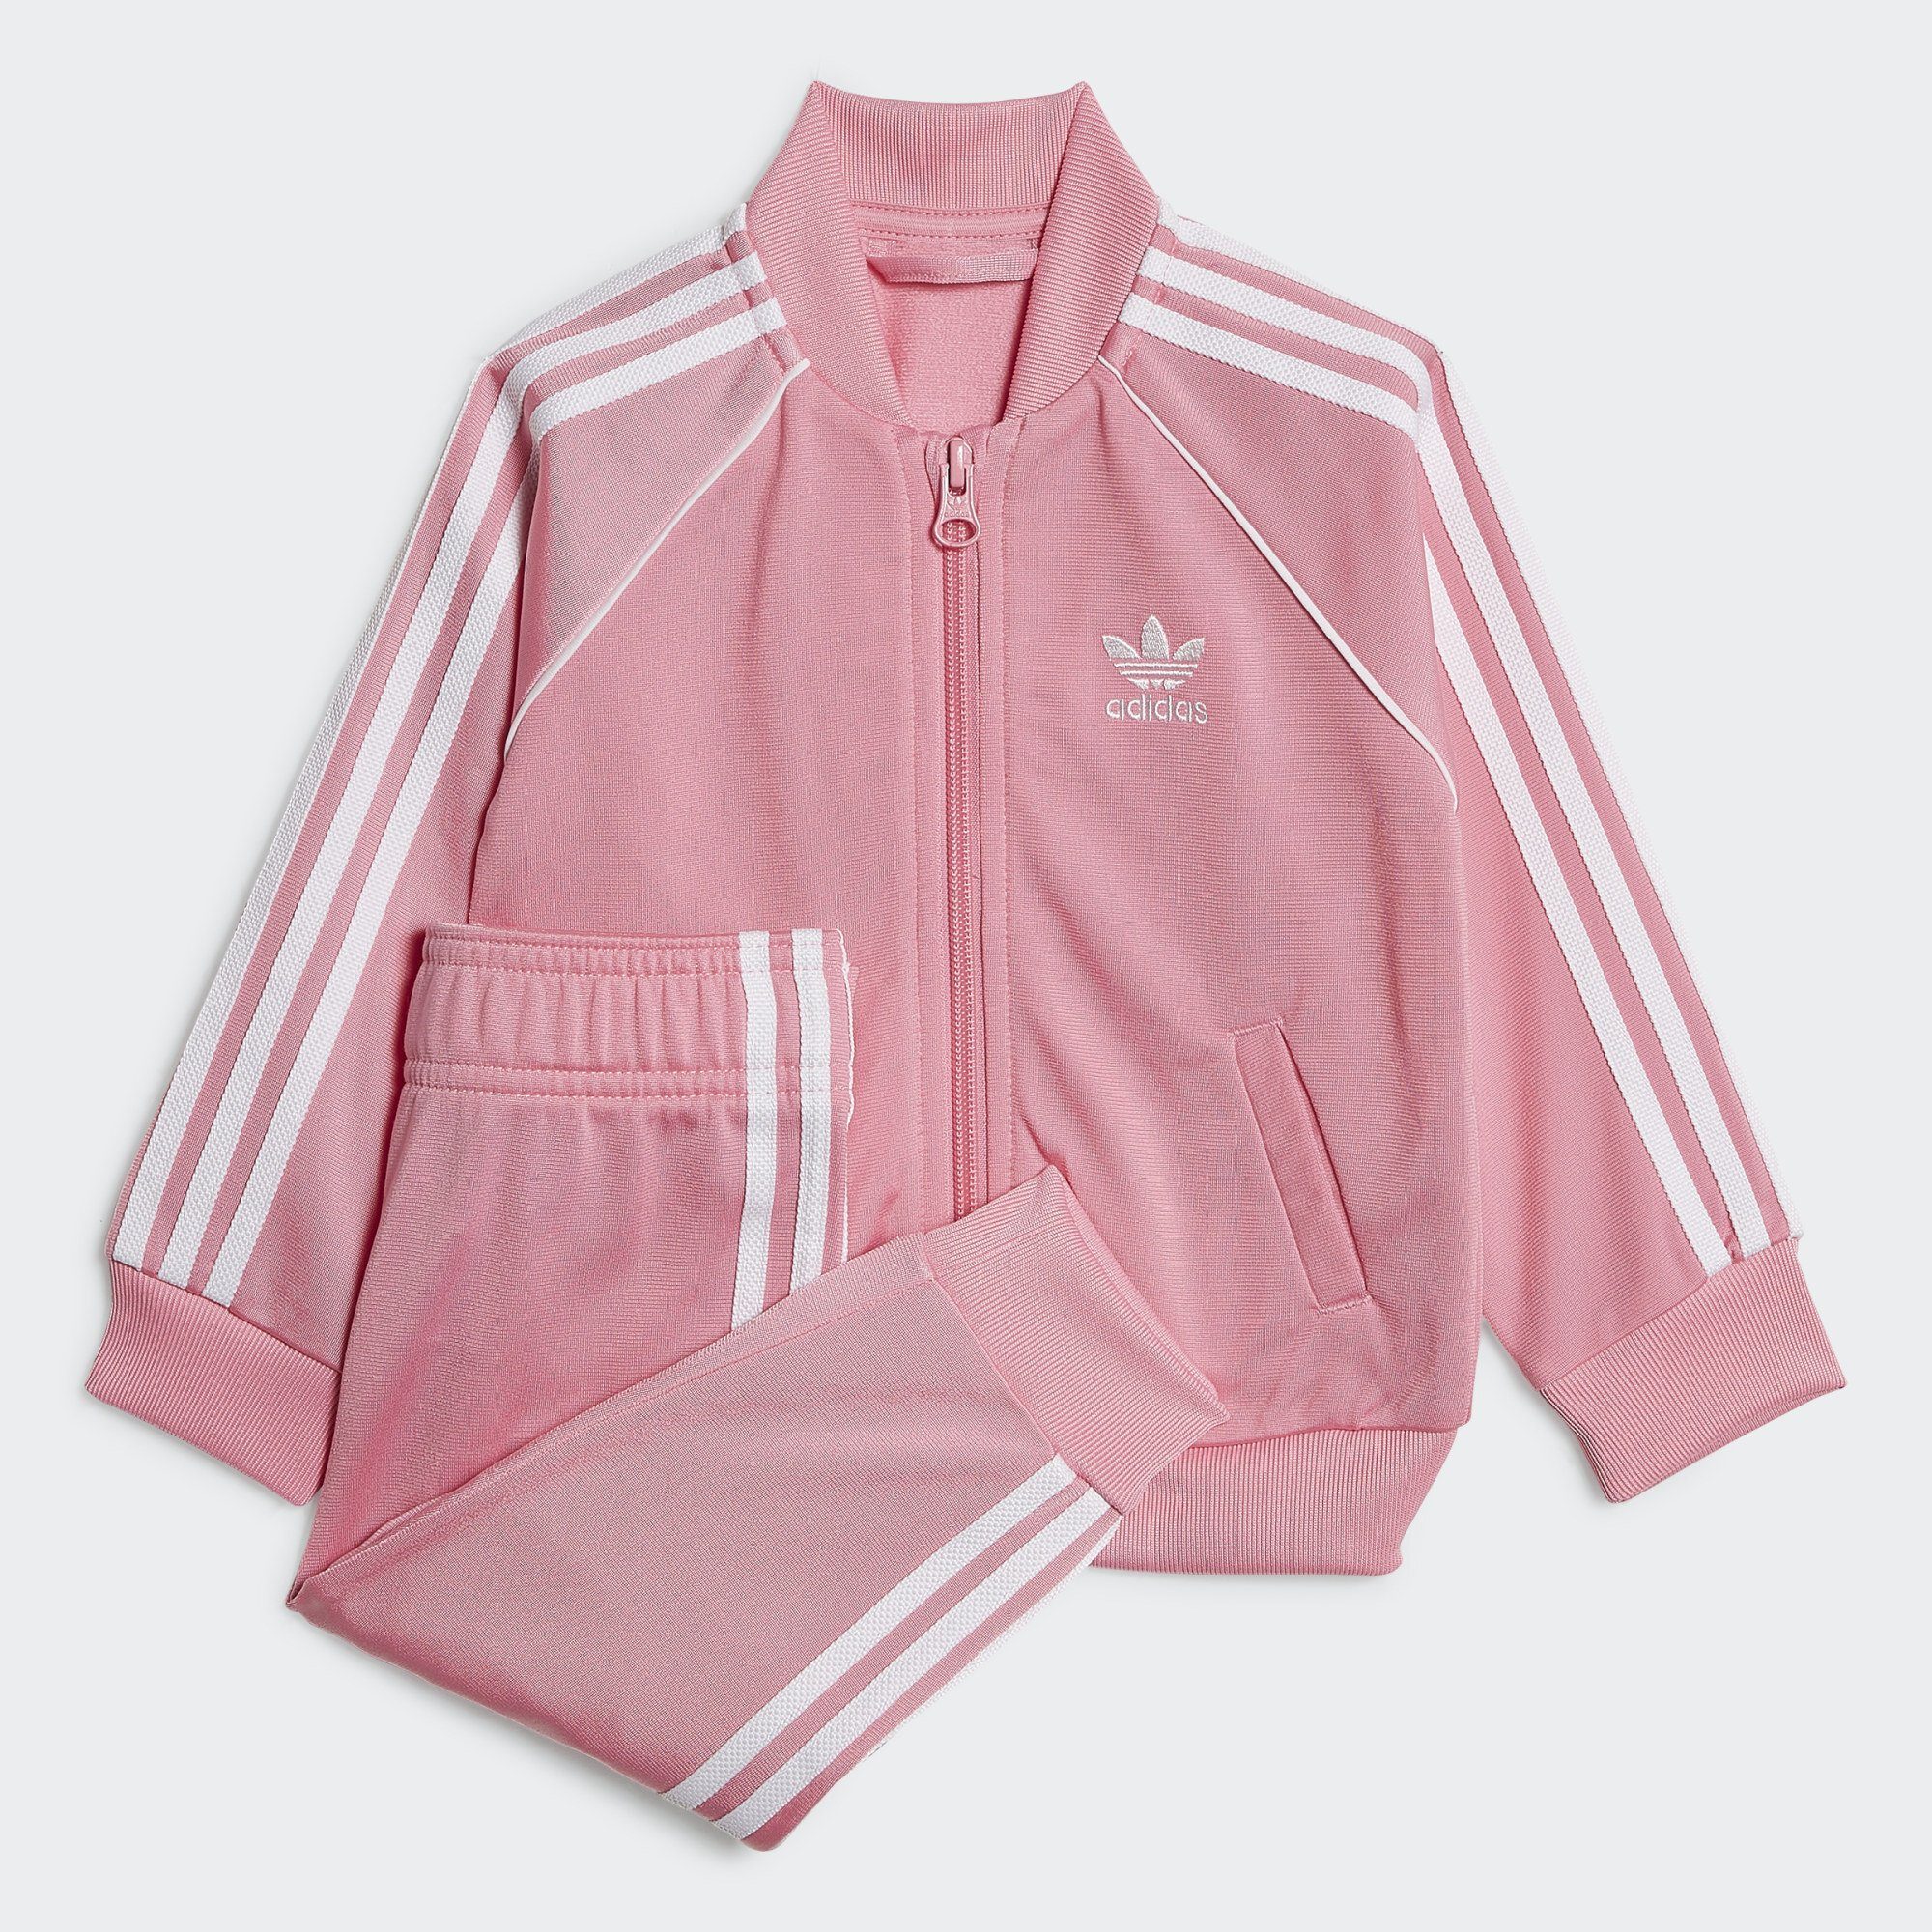 SST Originals Sportanzug TRAININGSANZUG Pink adidas ADICOLOR Bliss